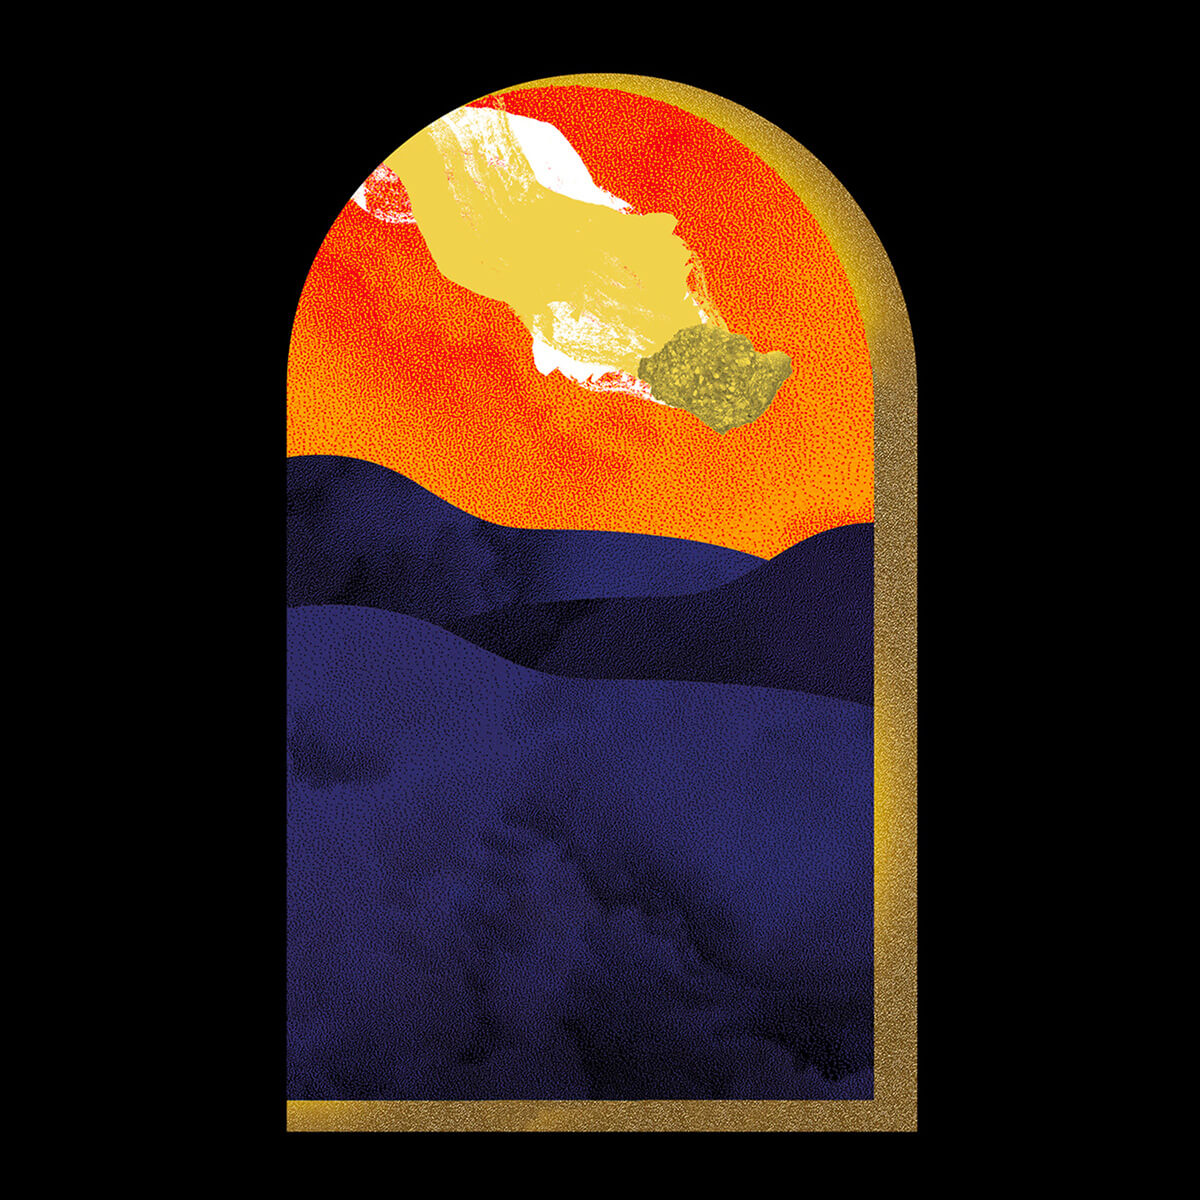 Meteor, Mockup, illustration, window, desert